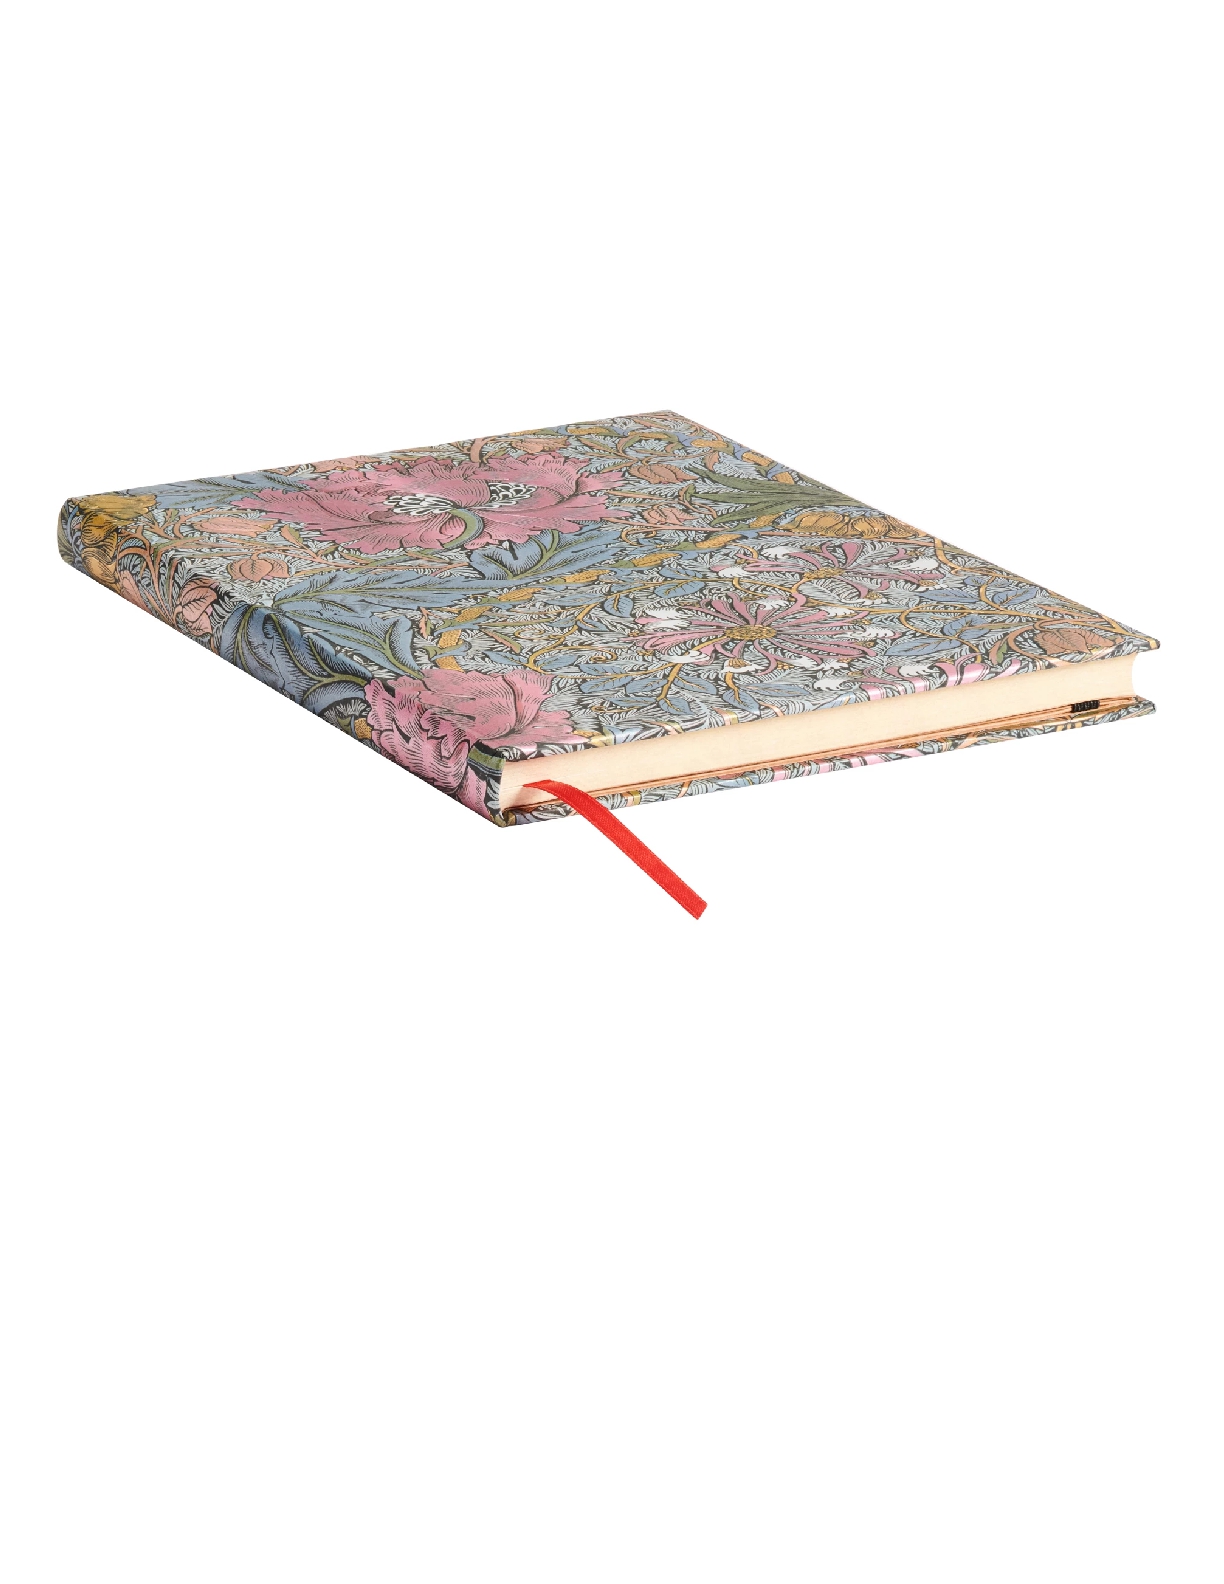 Morris Pink Honeysuckle, William Morris, Hardcover, Ultra, Lined, Elastic Band Closure, 144 Pg, 120 GSM